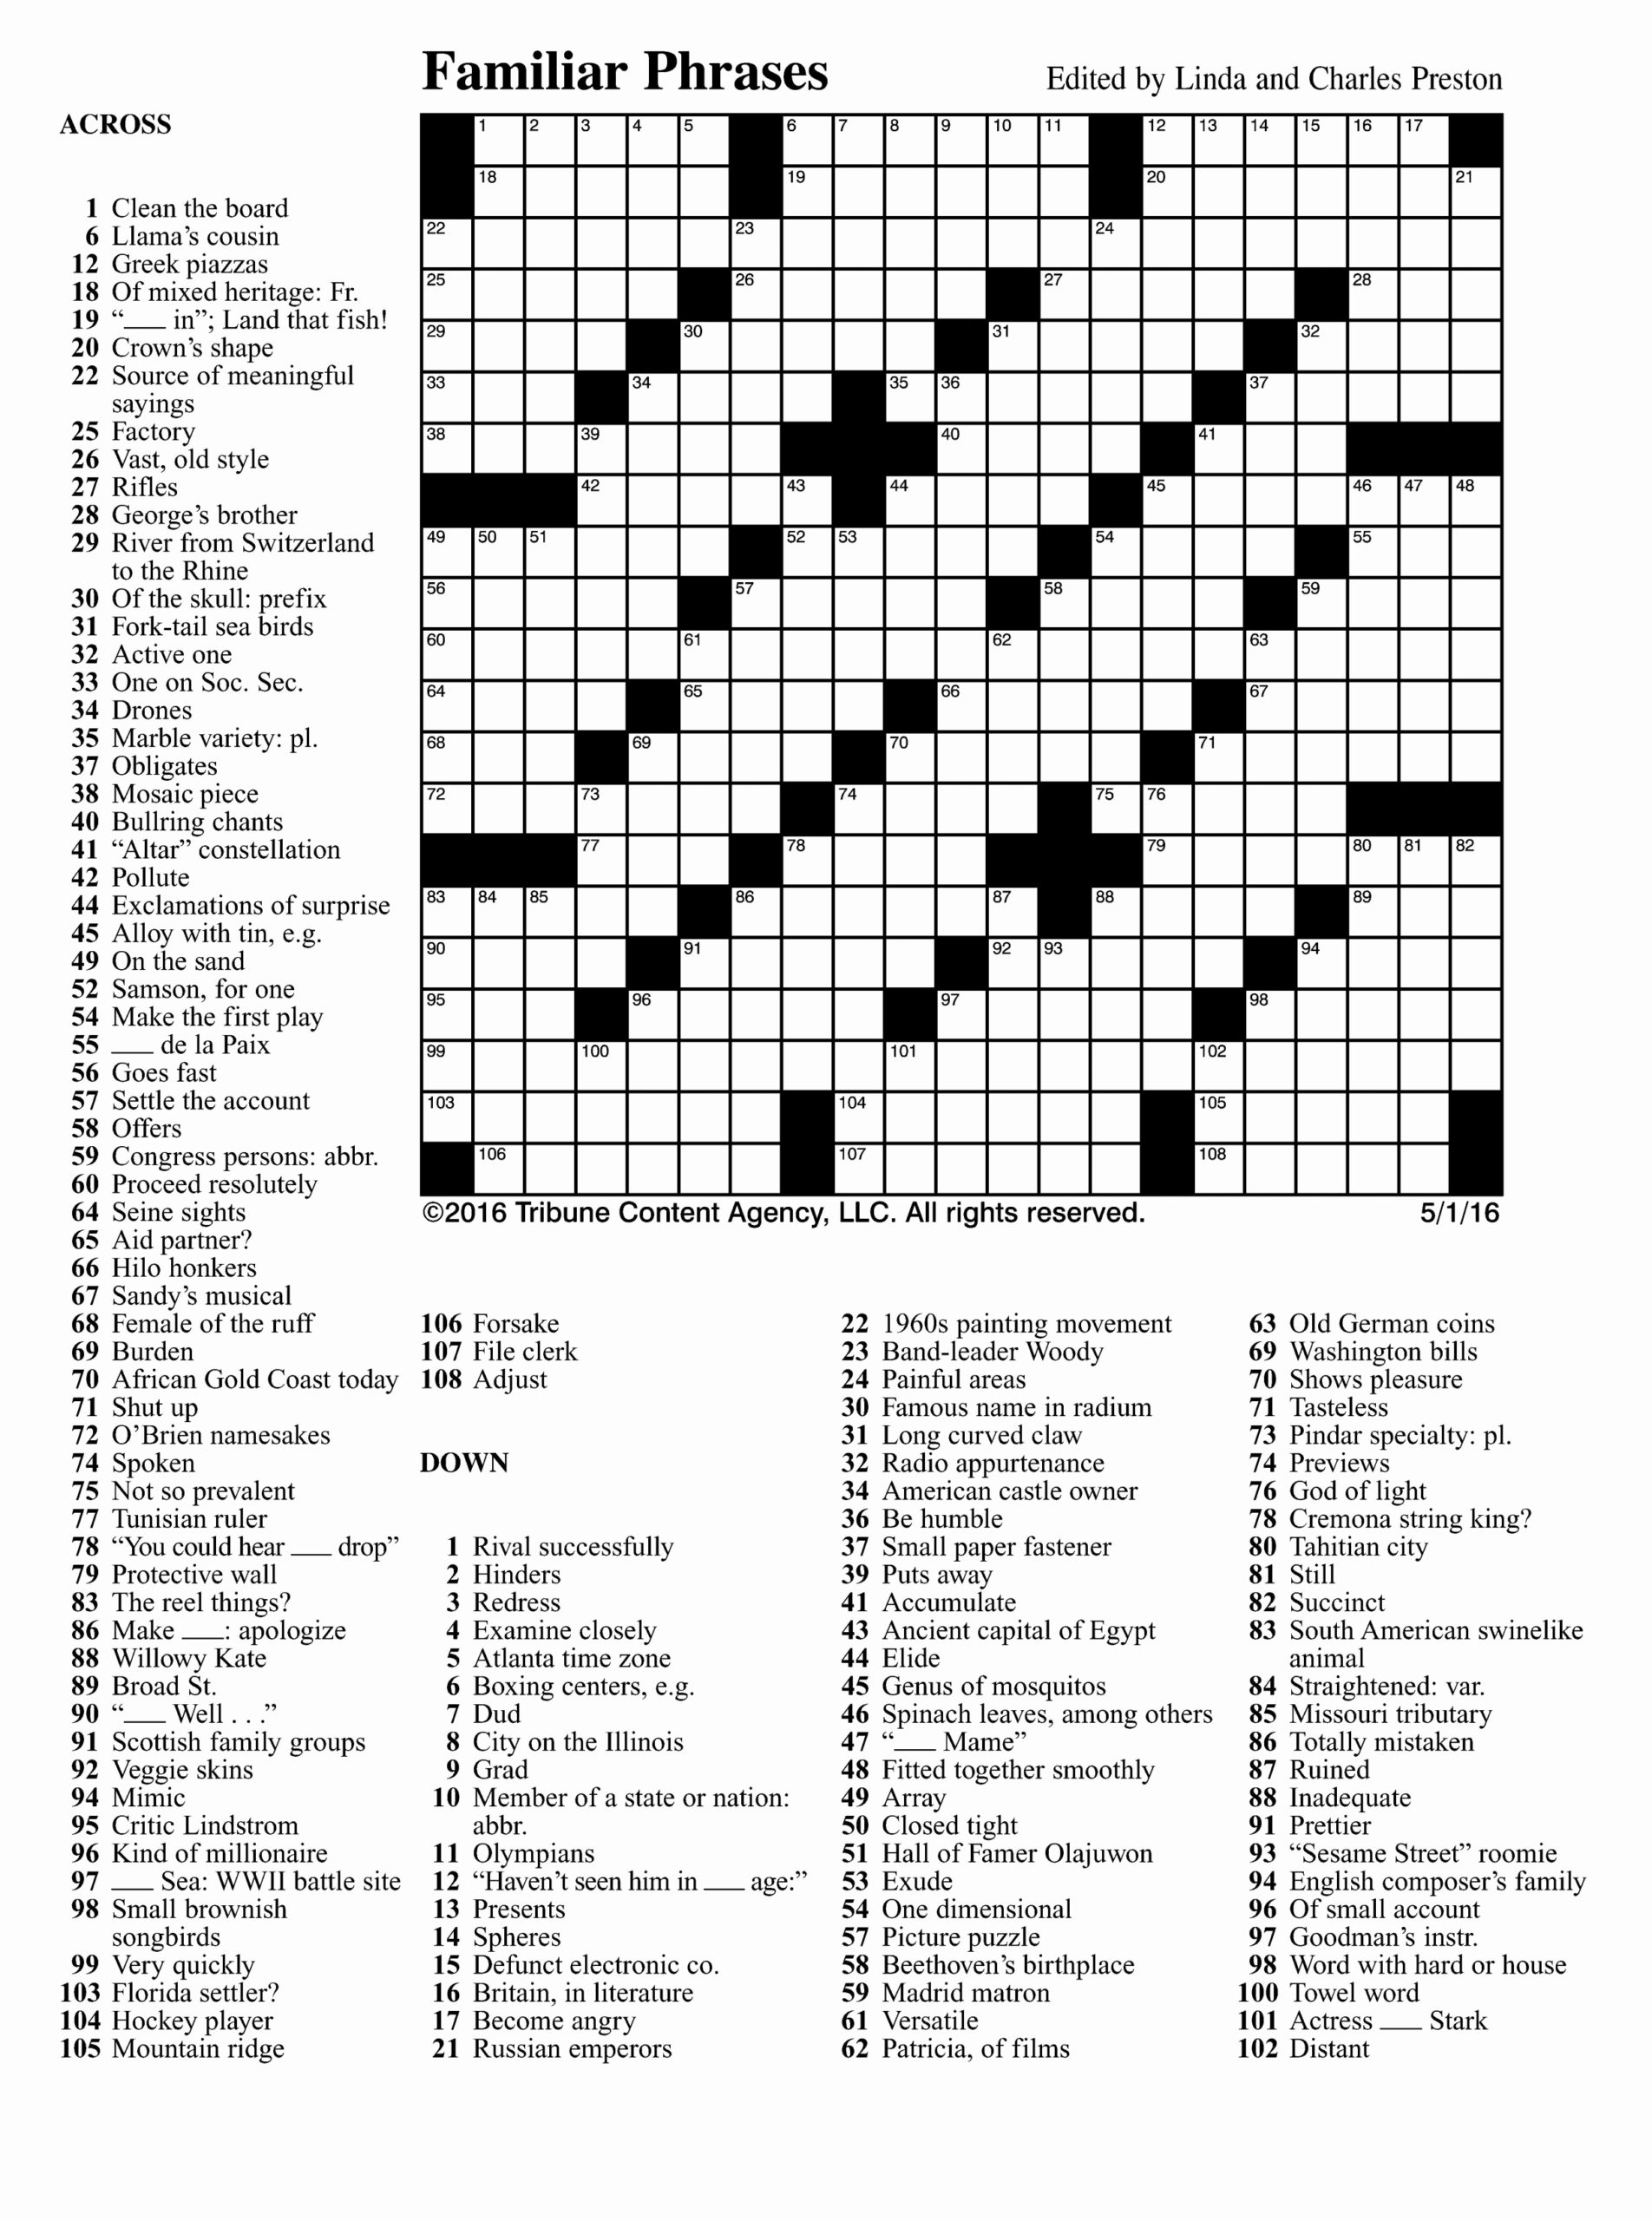 Personalized Crossword Puzzle Printable